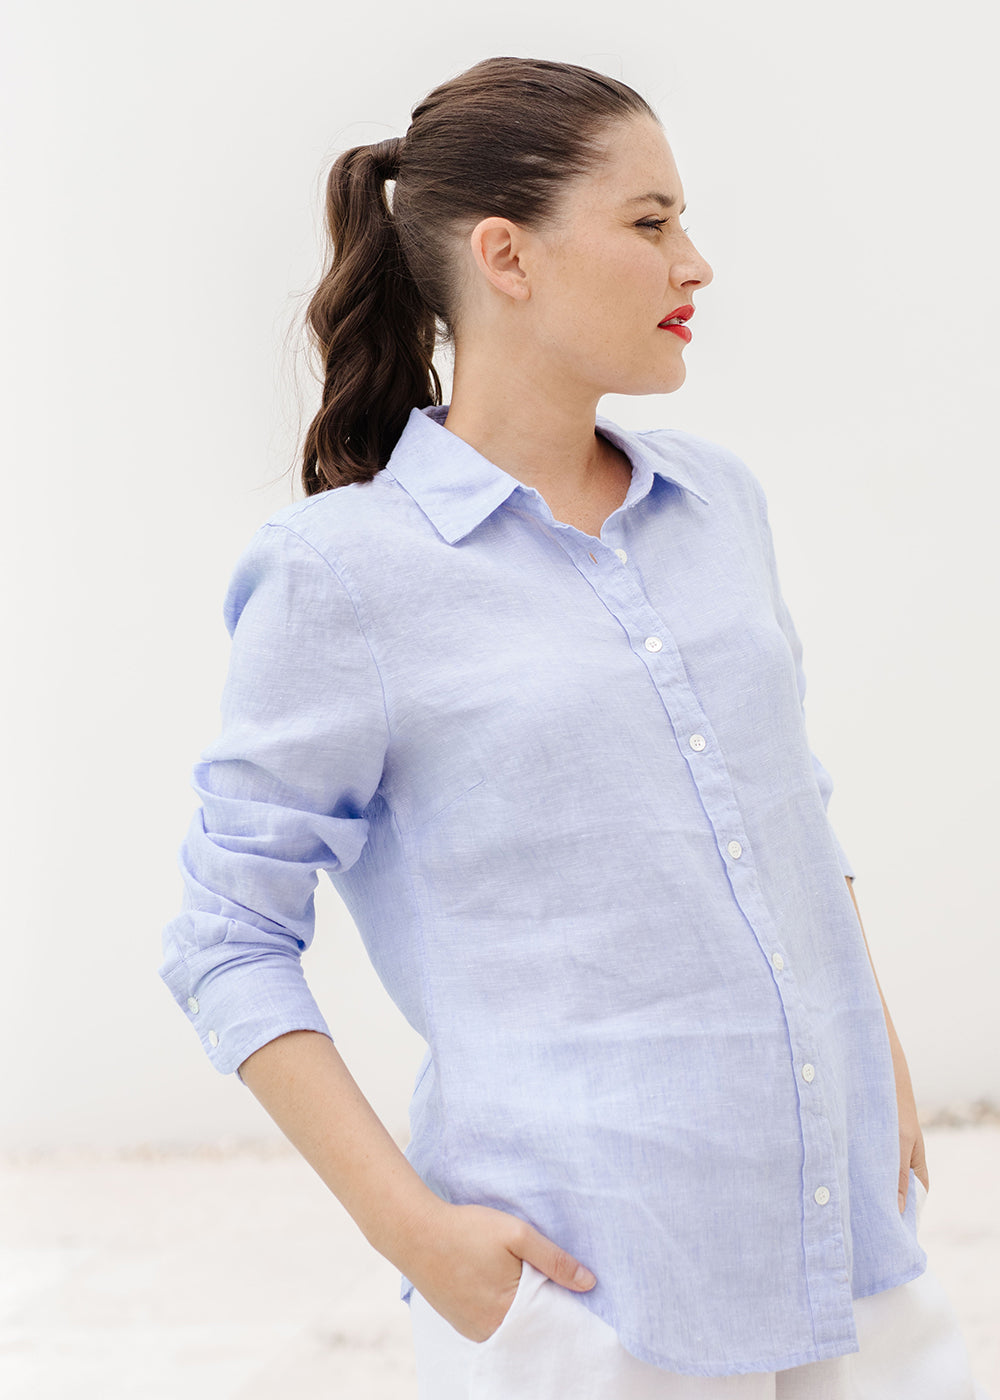 Goondiwindi Cotton Casual long Sleeve Linen Shirt 4353-97-S22